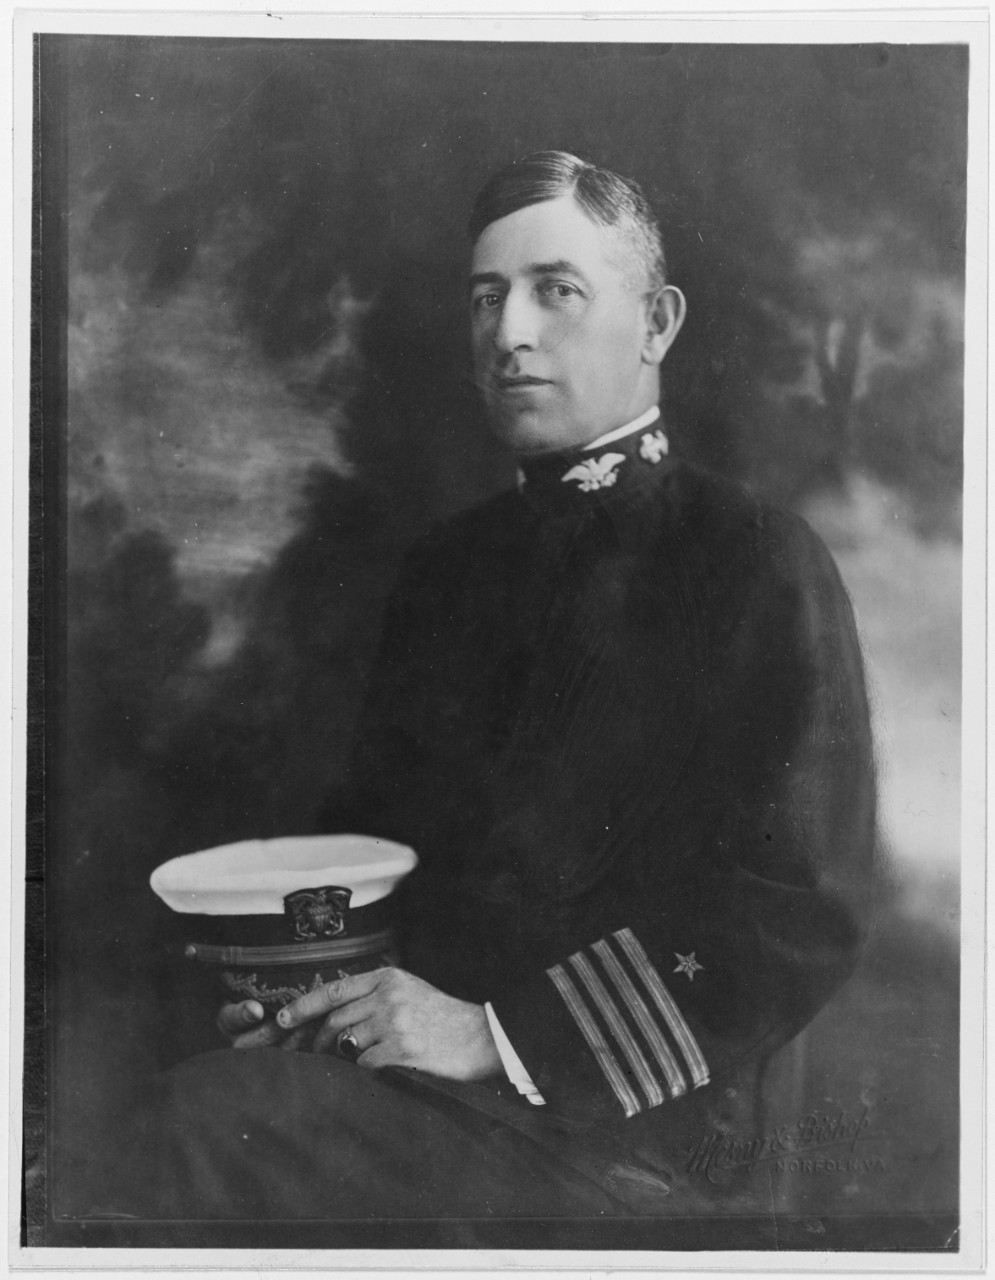 Captain Charles F. Macklin, USN Reserve Force